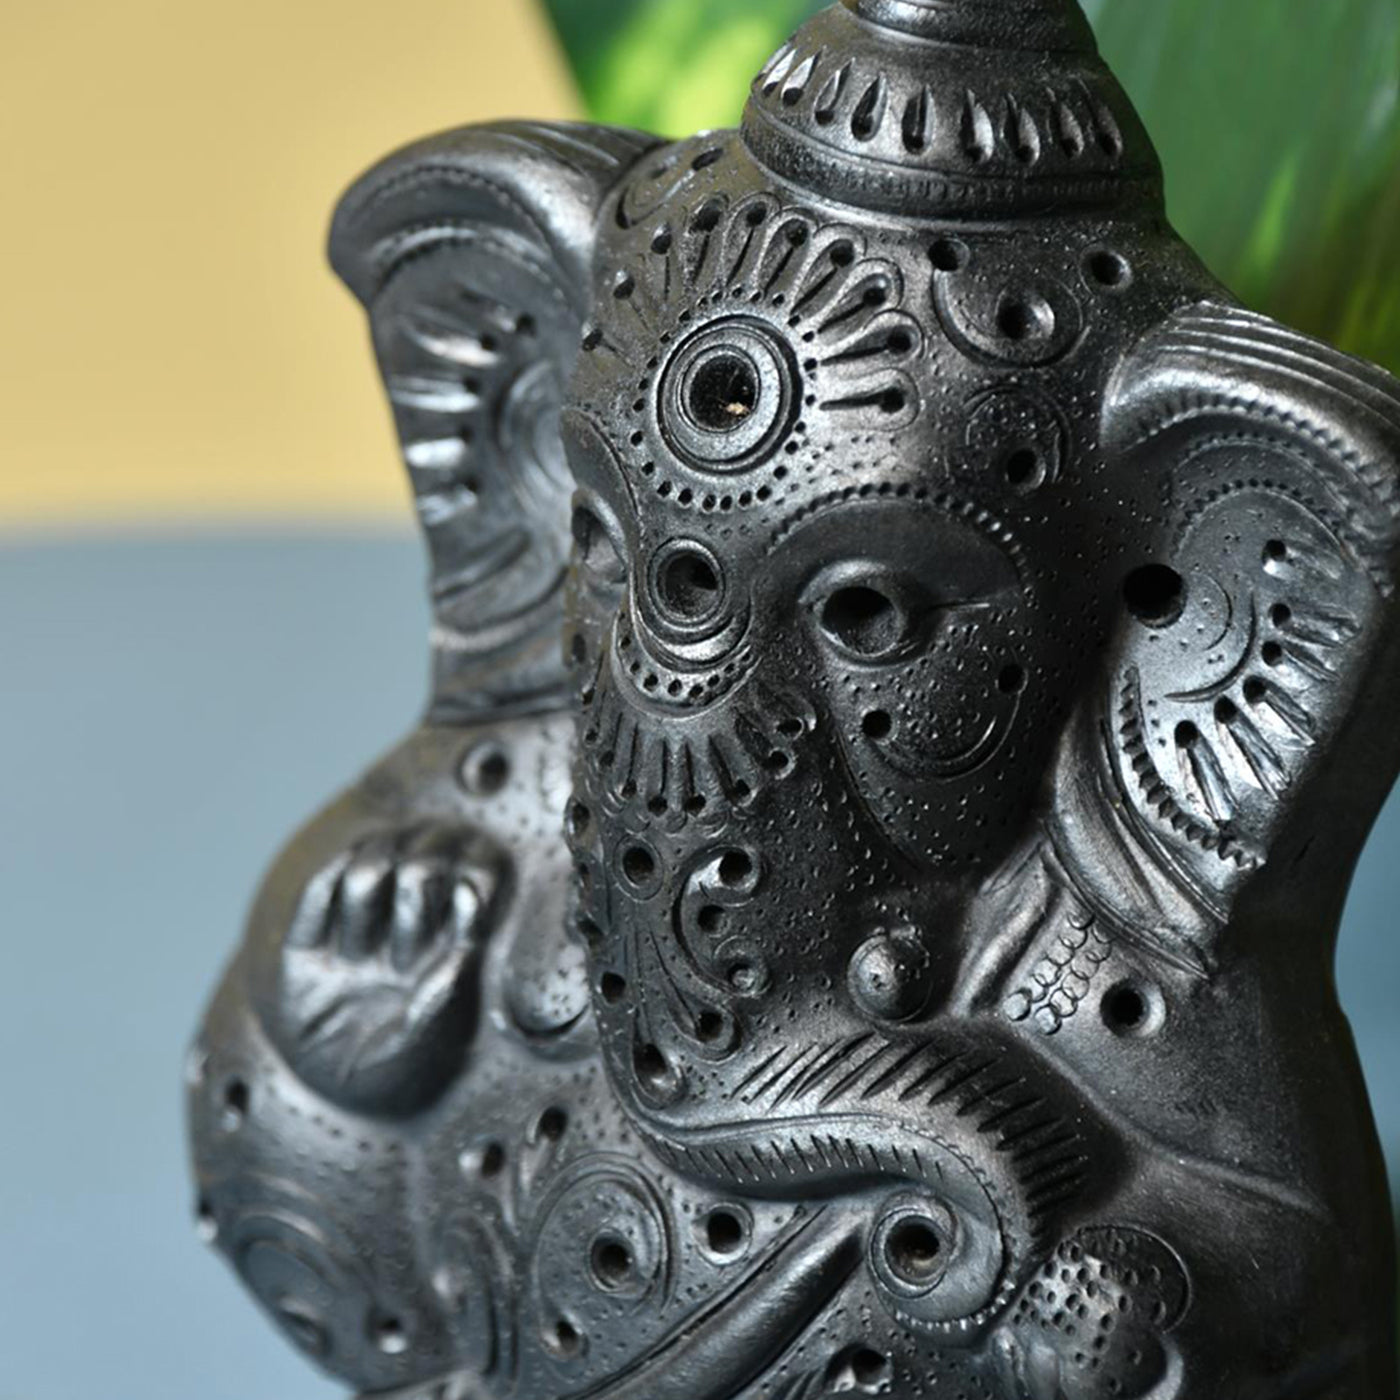 Divine Blessing Unique Black Terracotta Ganesh Home Decor